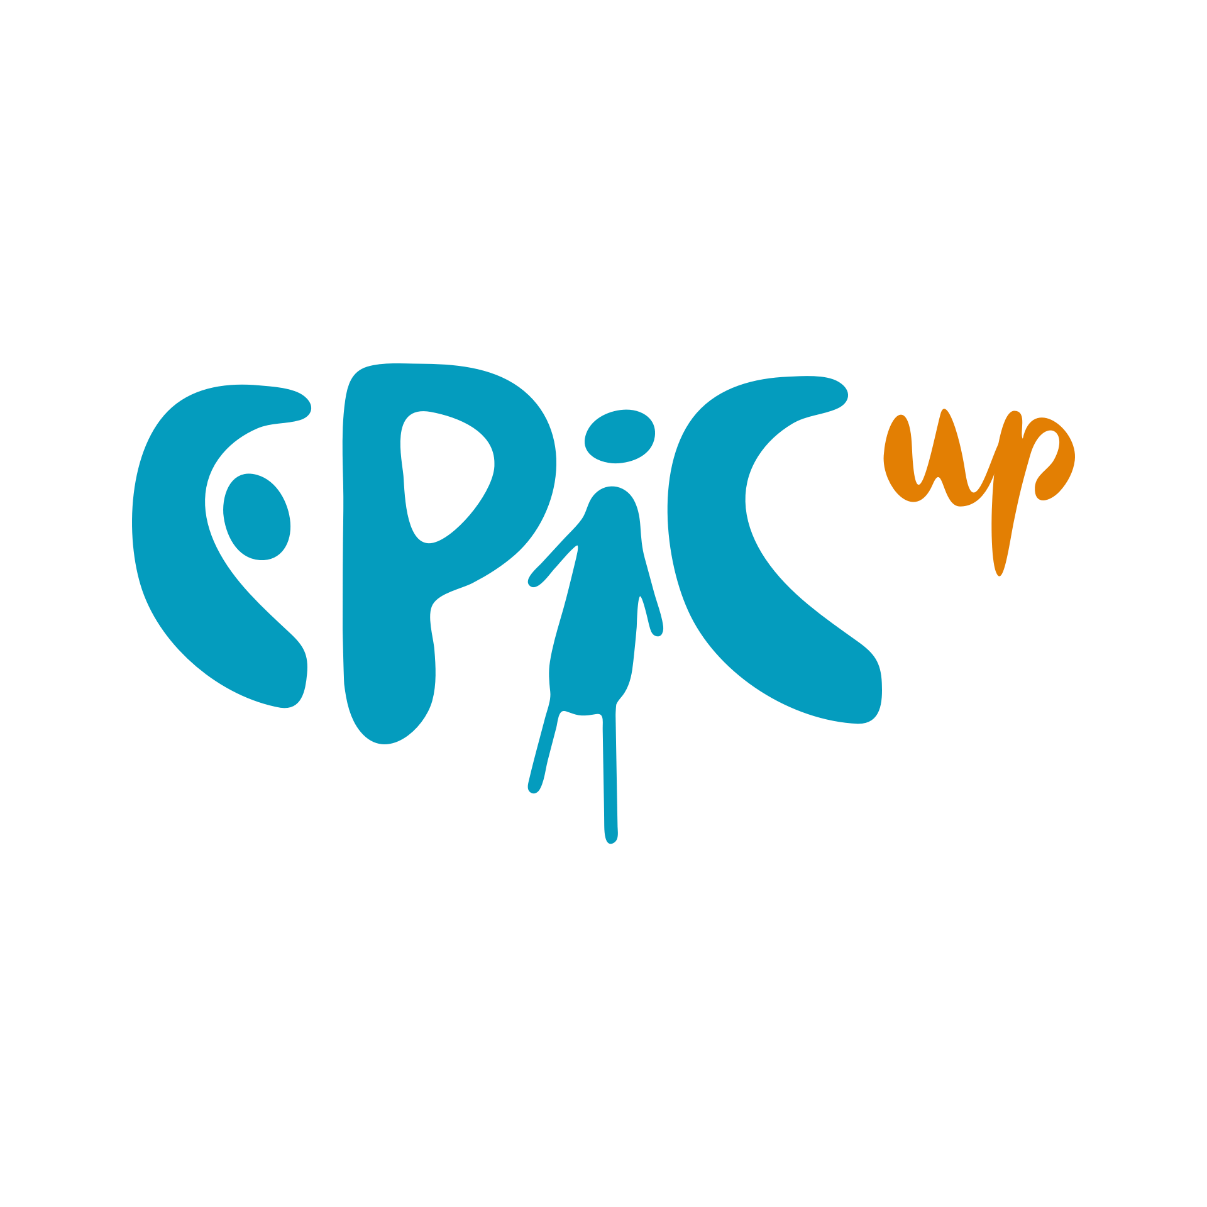 EPIC-UP – the European Platform of Integrating Communities